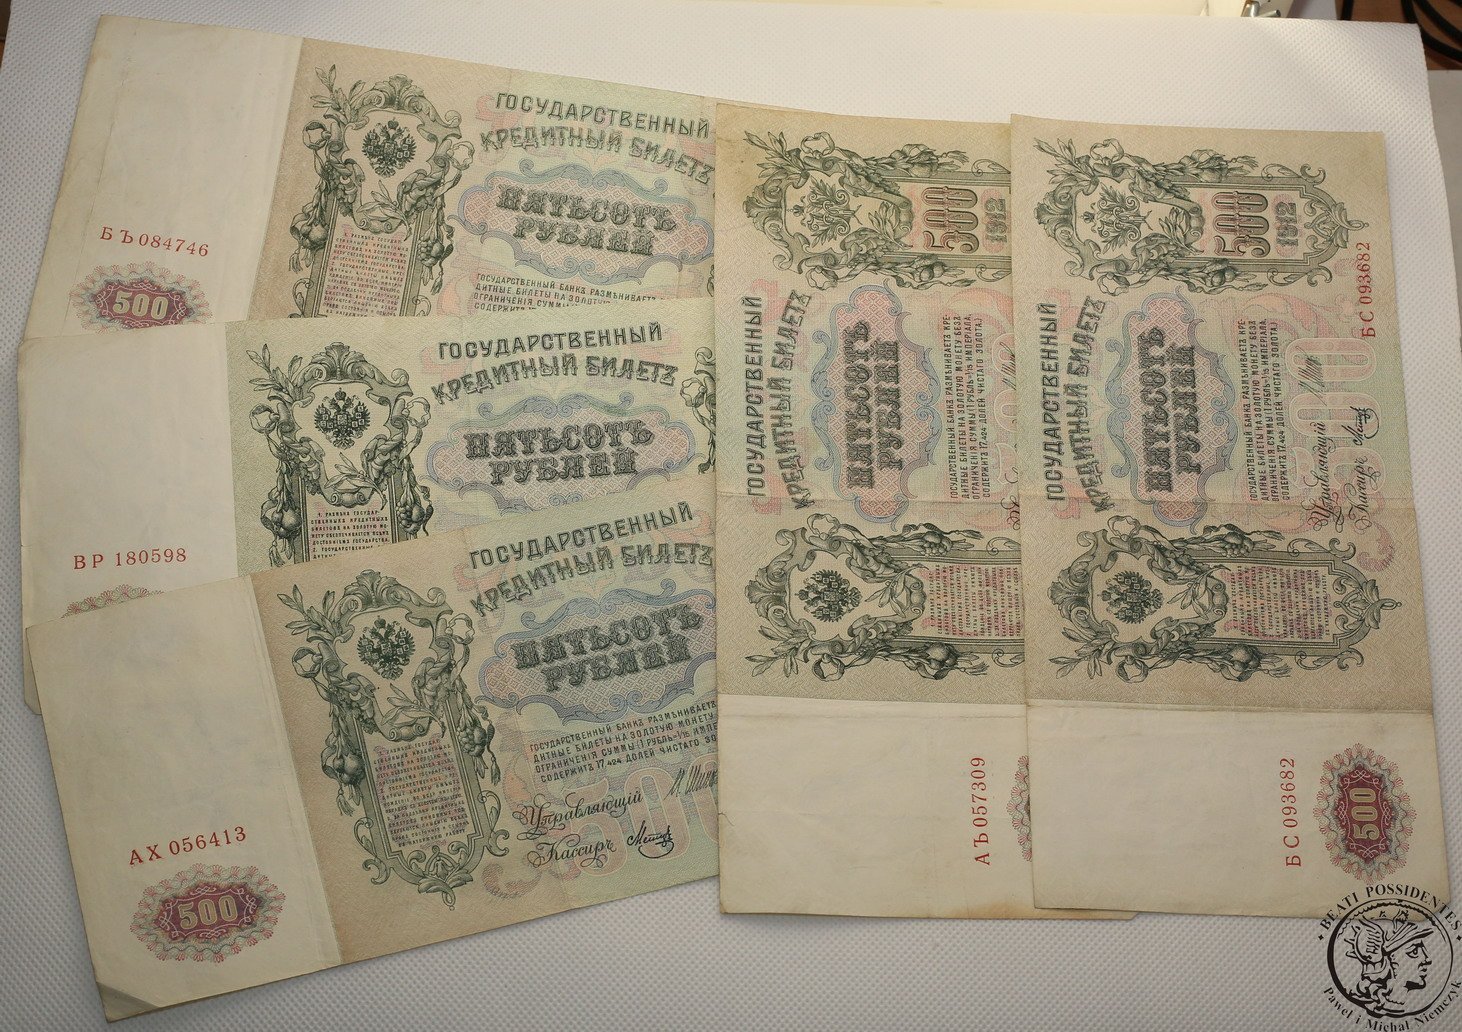 Rosja banknoty 500 Rubli 1912 lot 5 sztuk